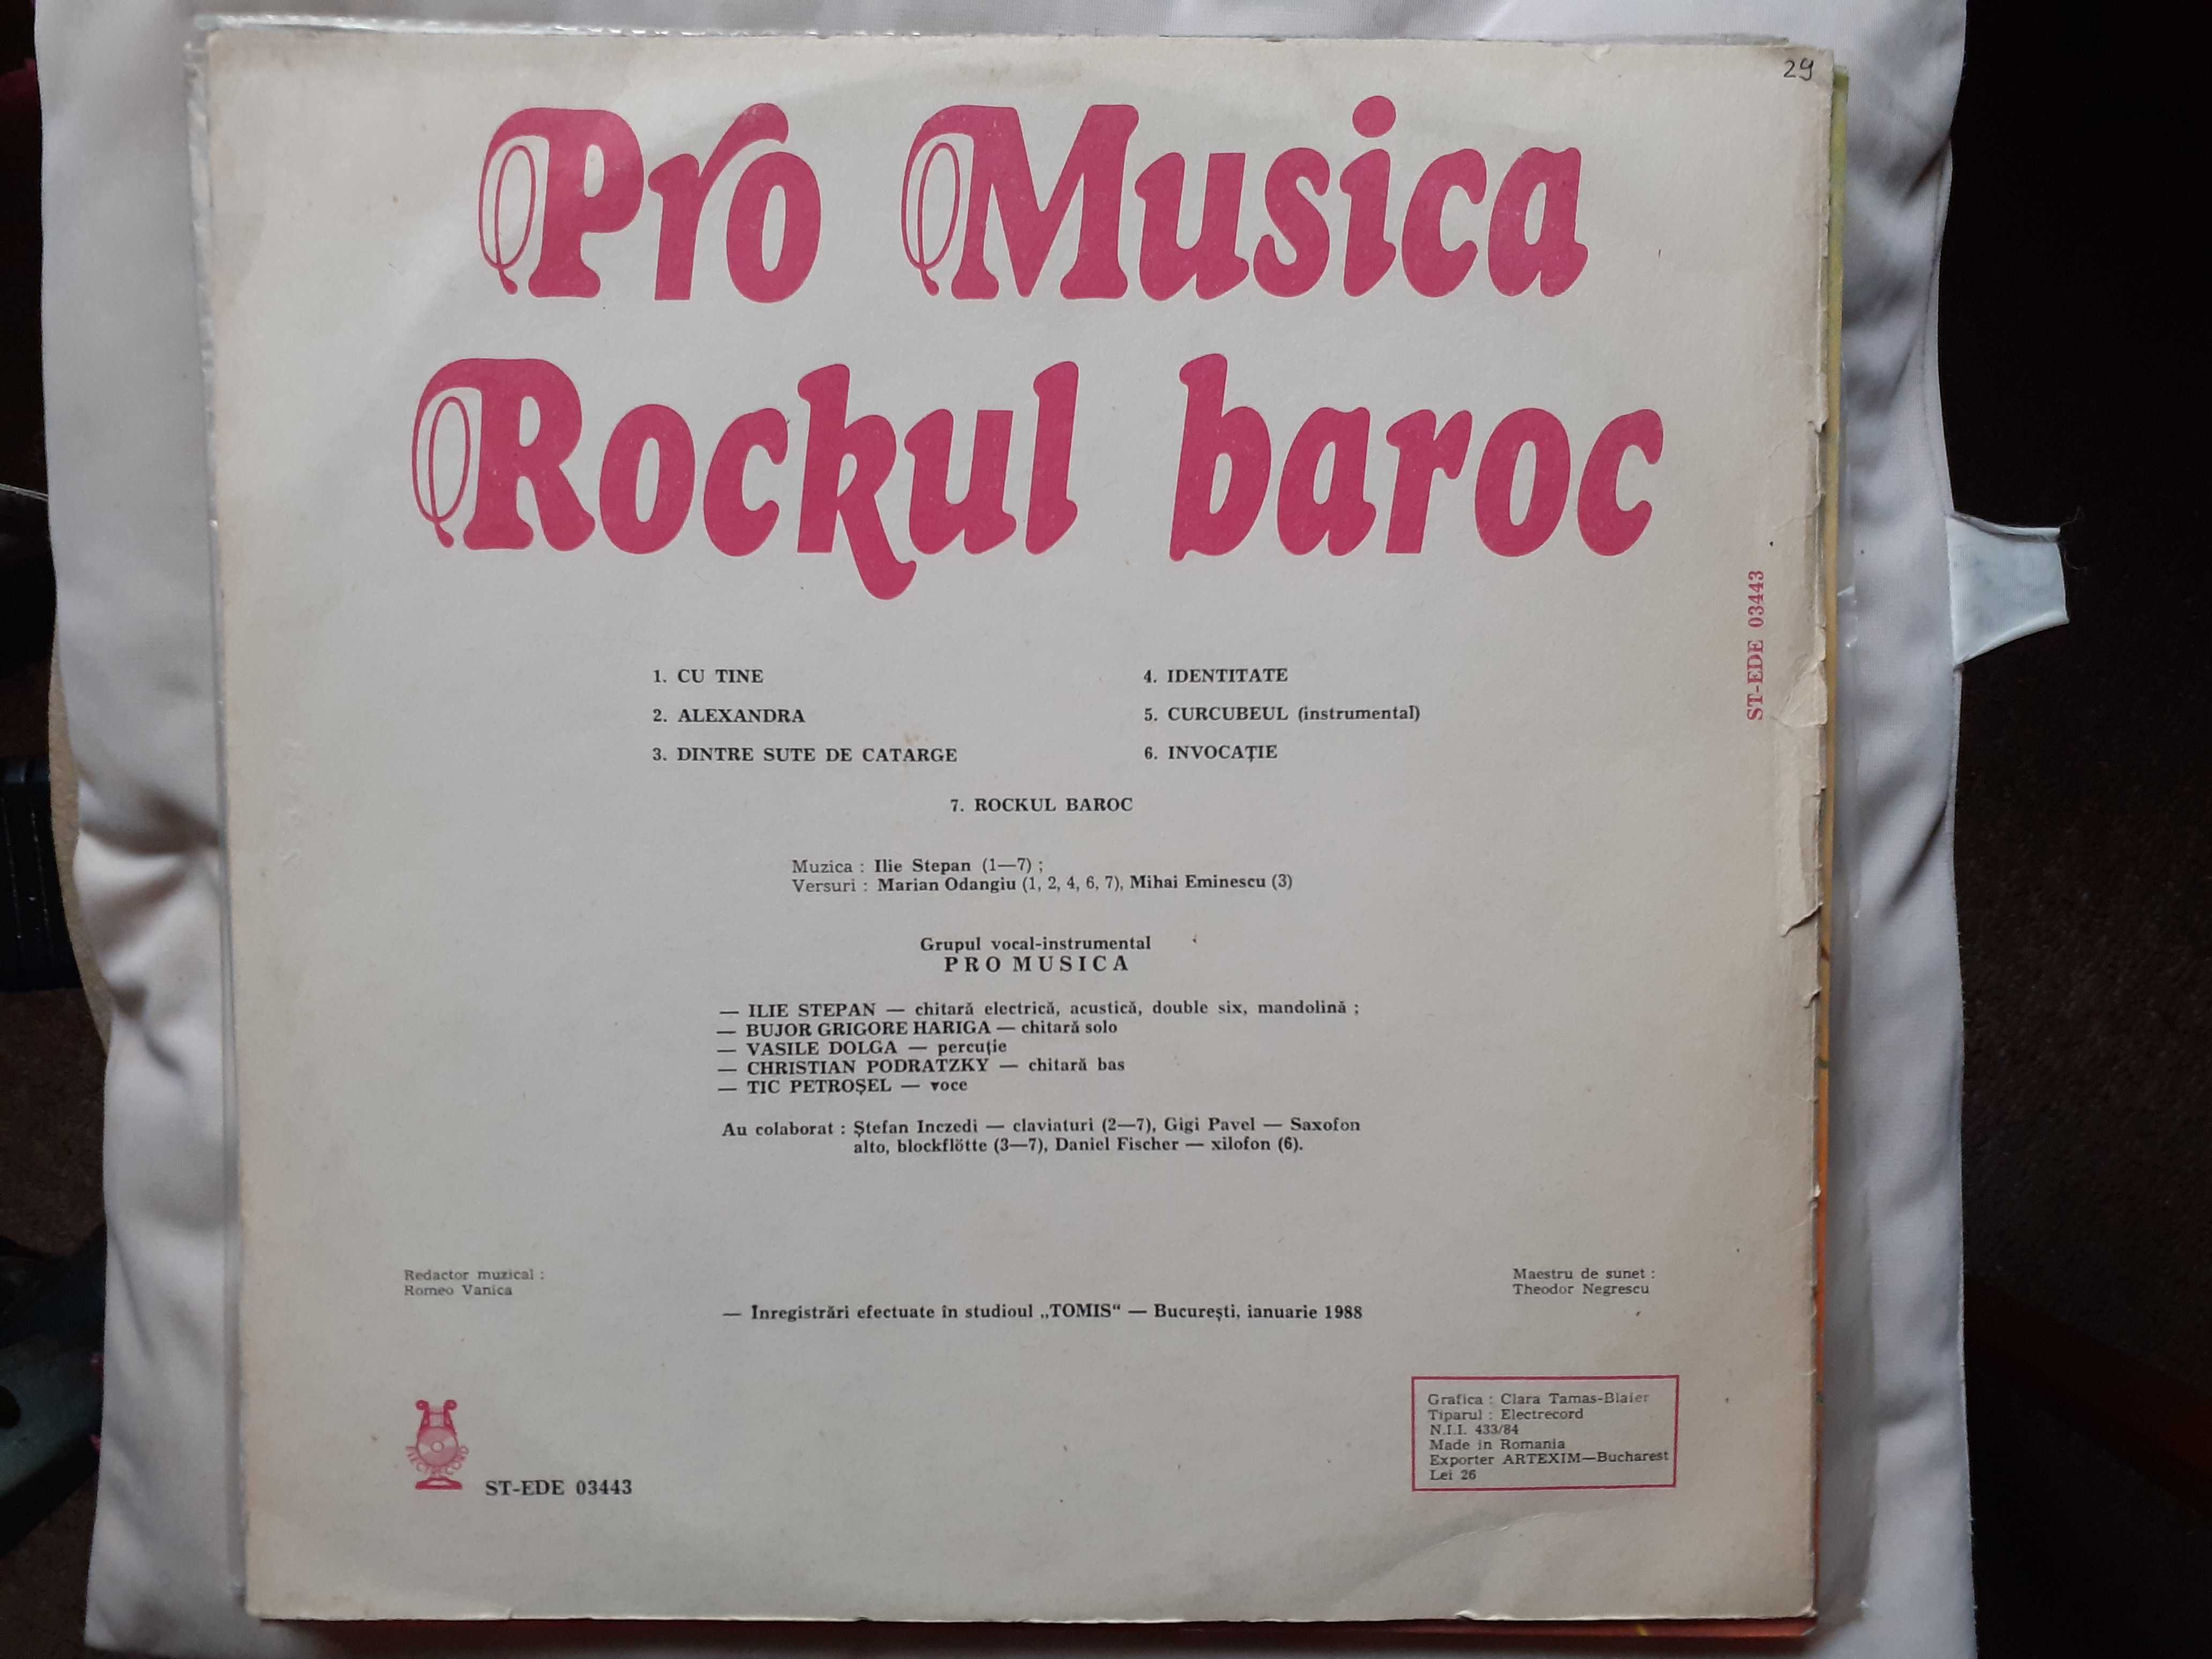 Vinil Pro Musica "Rockul barock" 1988